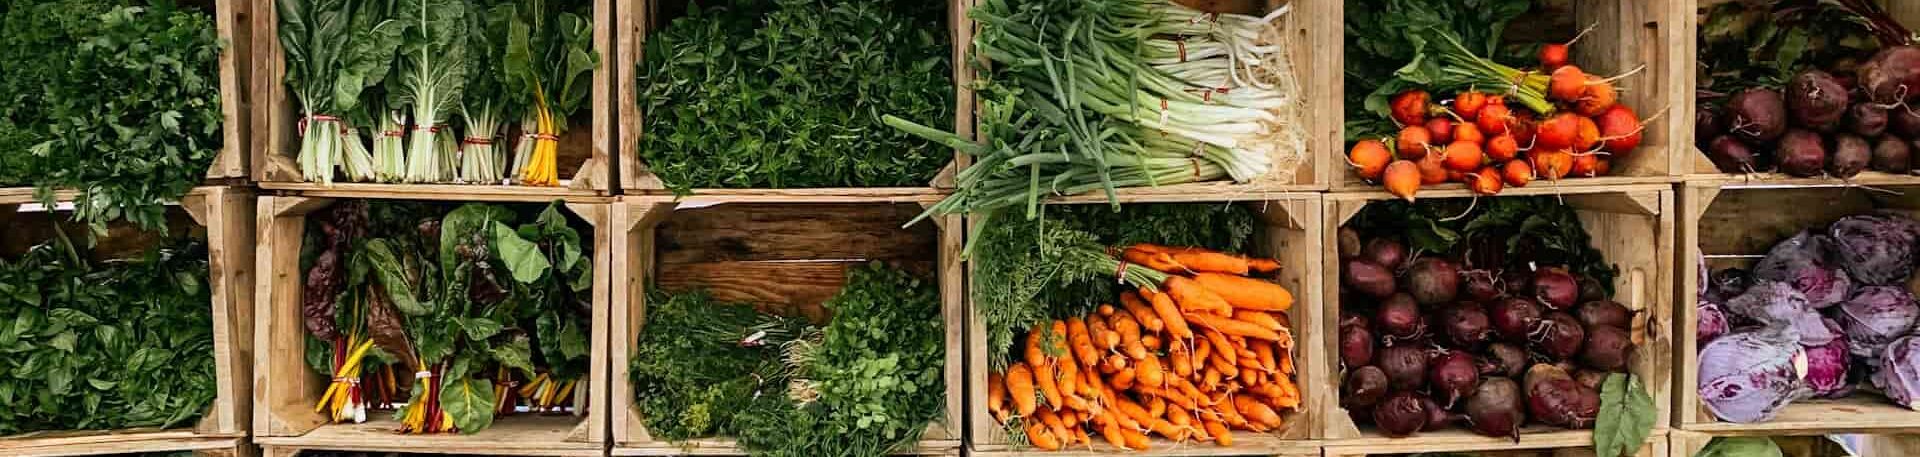 økologiske grøntsager